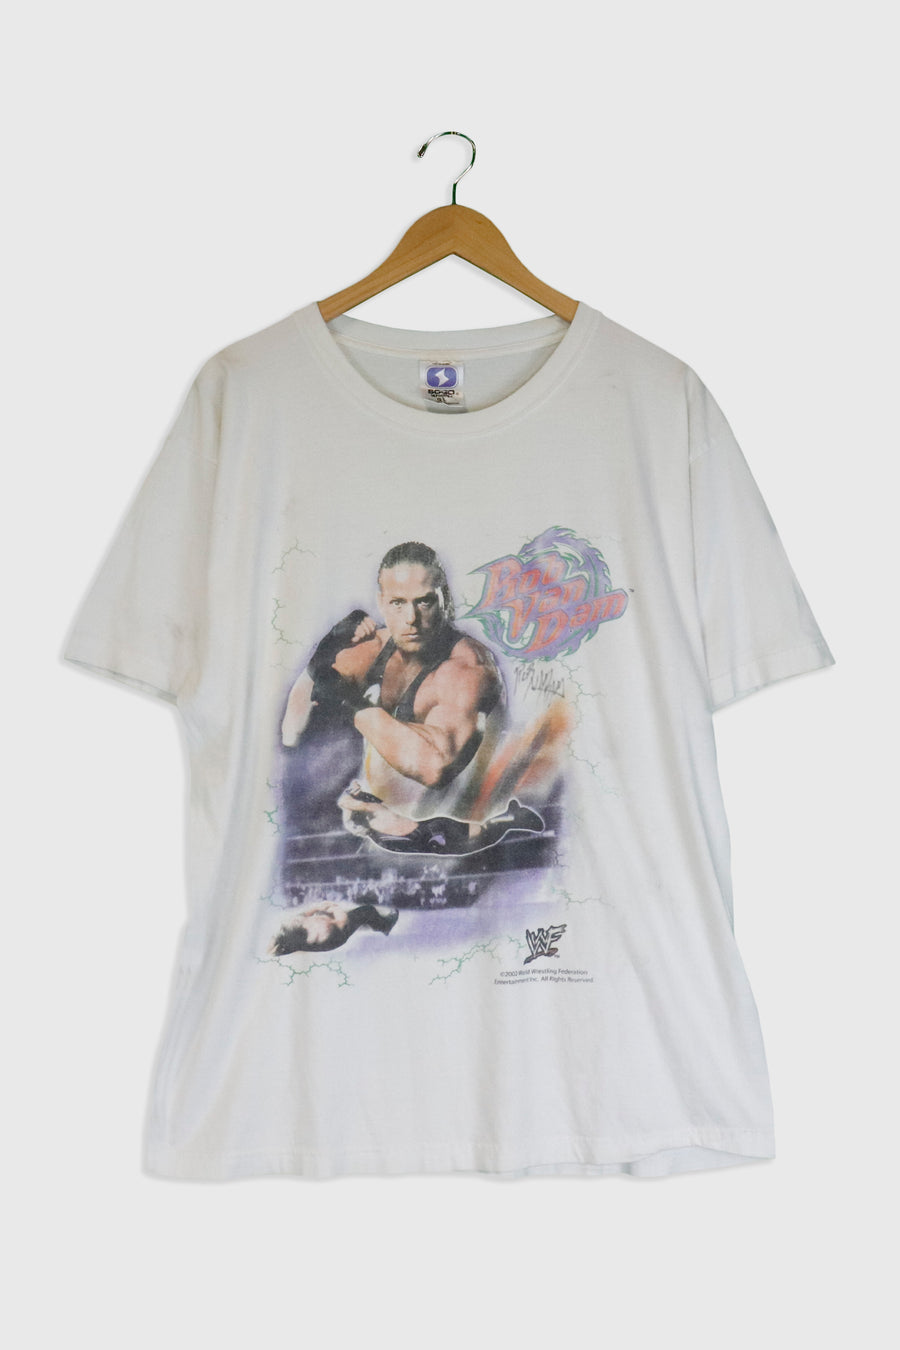 Vintage 2002 WWF Rob Van Dam Signed T Shirt Sz L